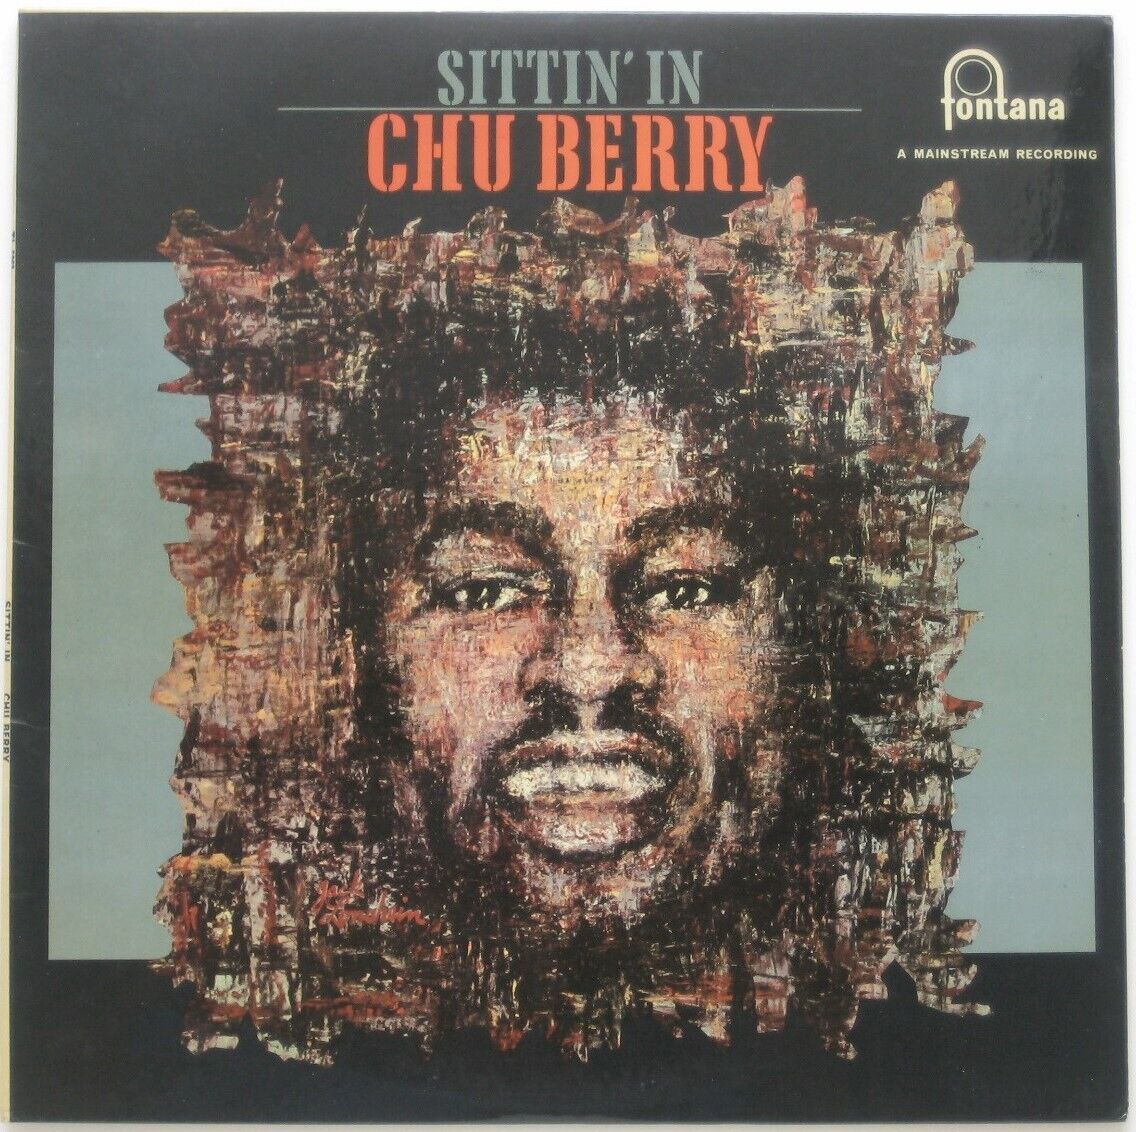 CHU BERRY Sittin' In Fontana TL 5263 Vinyl 33 rpm LP Made in Great Britain 1965